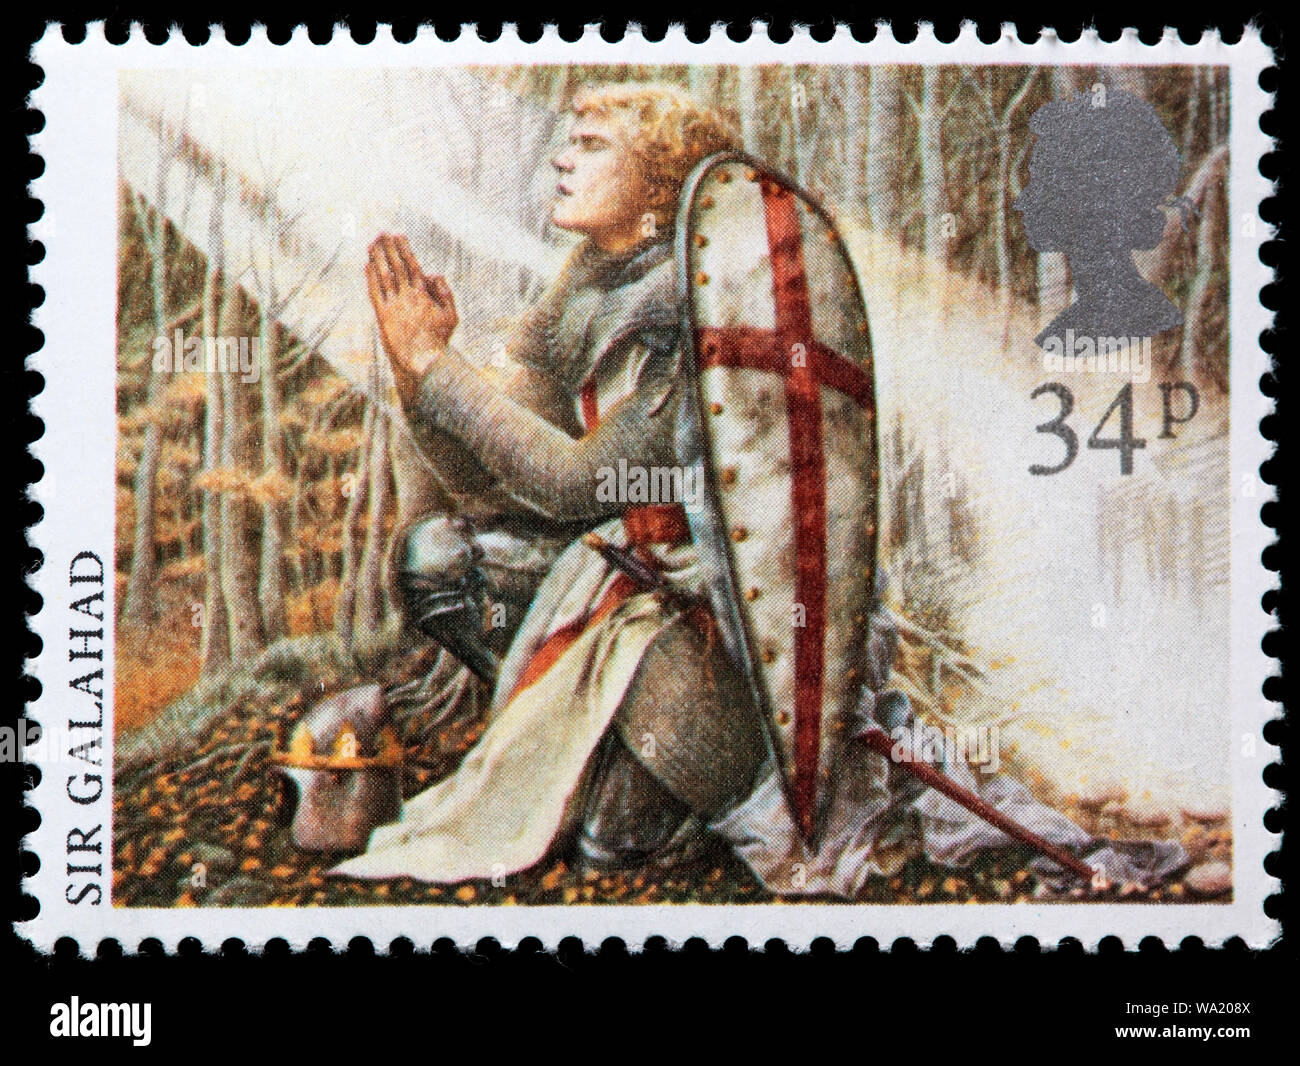 Sir Galahad, Arthurian Legend, postage stamp, UK, 1985 Stock Photo